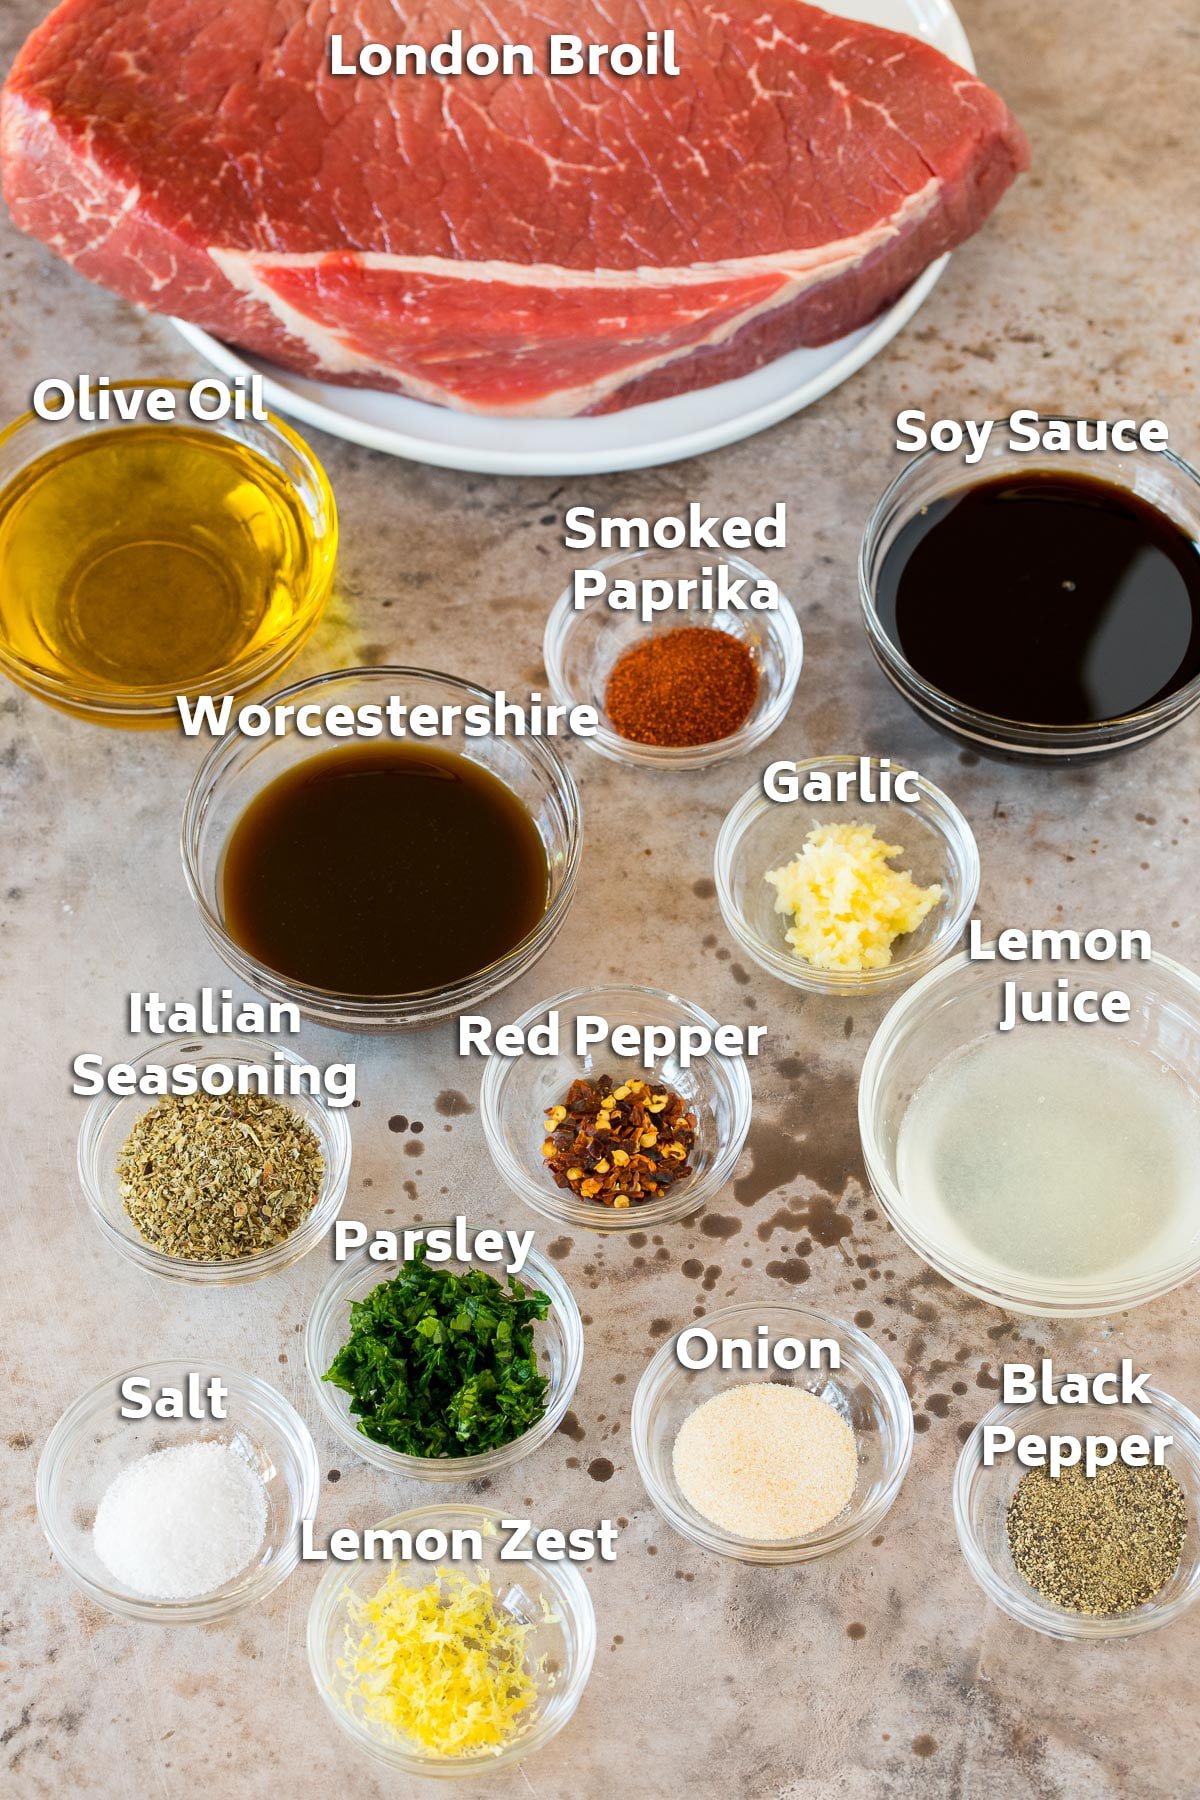 Ingredients including beef, olive oil, soy sauce, garlic and seasonings.